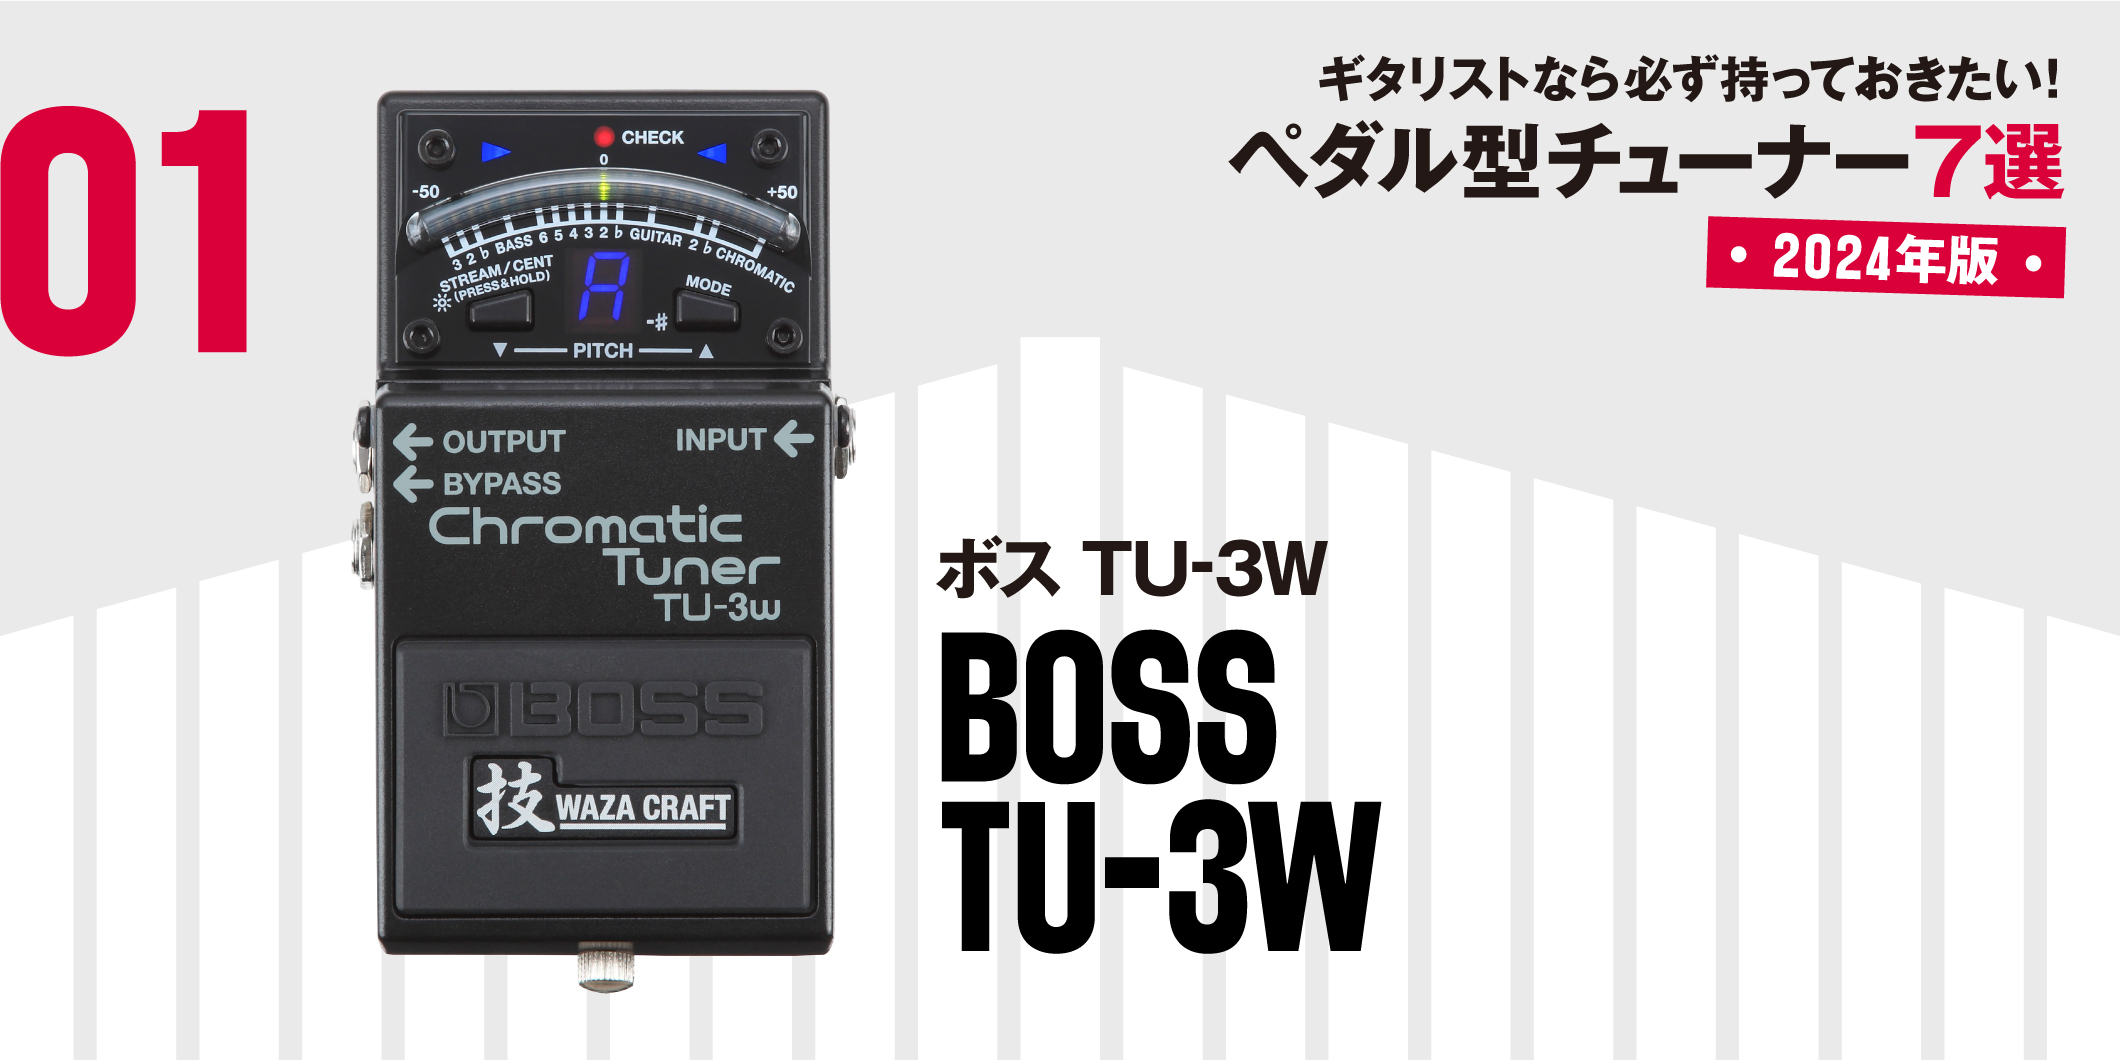 BOSS／TU-3W〜ギタリストなら必ず持っておきたい、最新ペダル型 